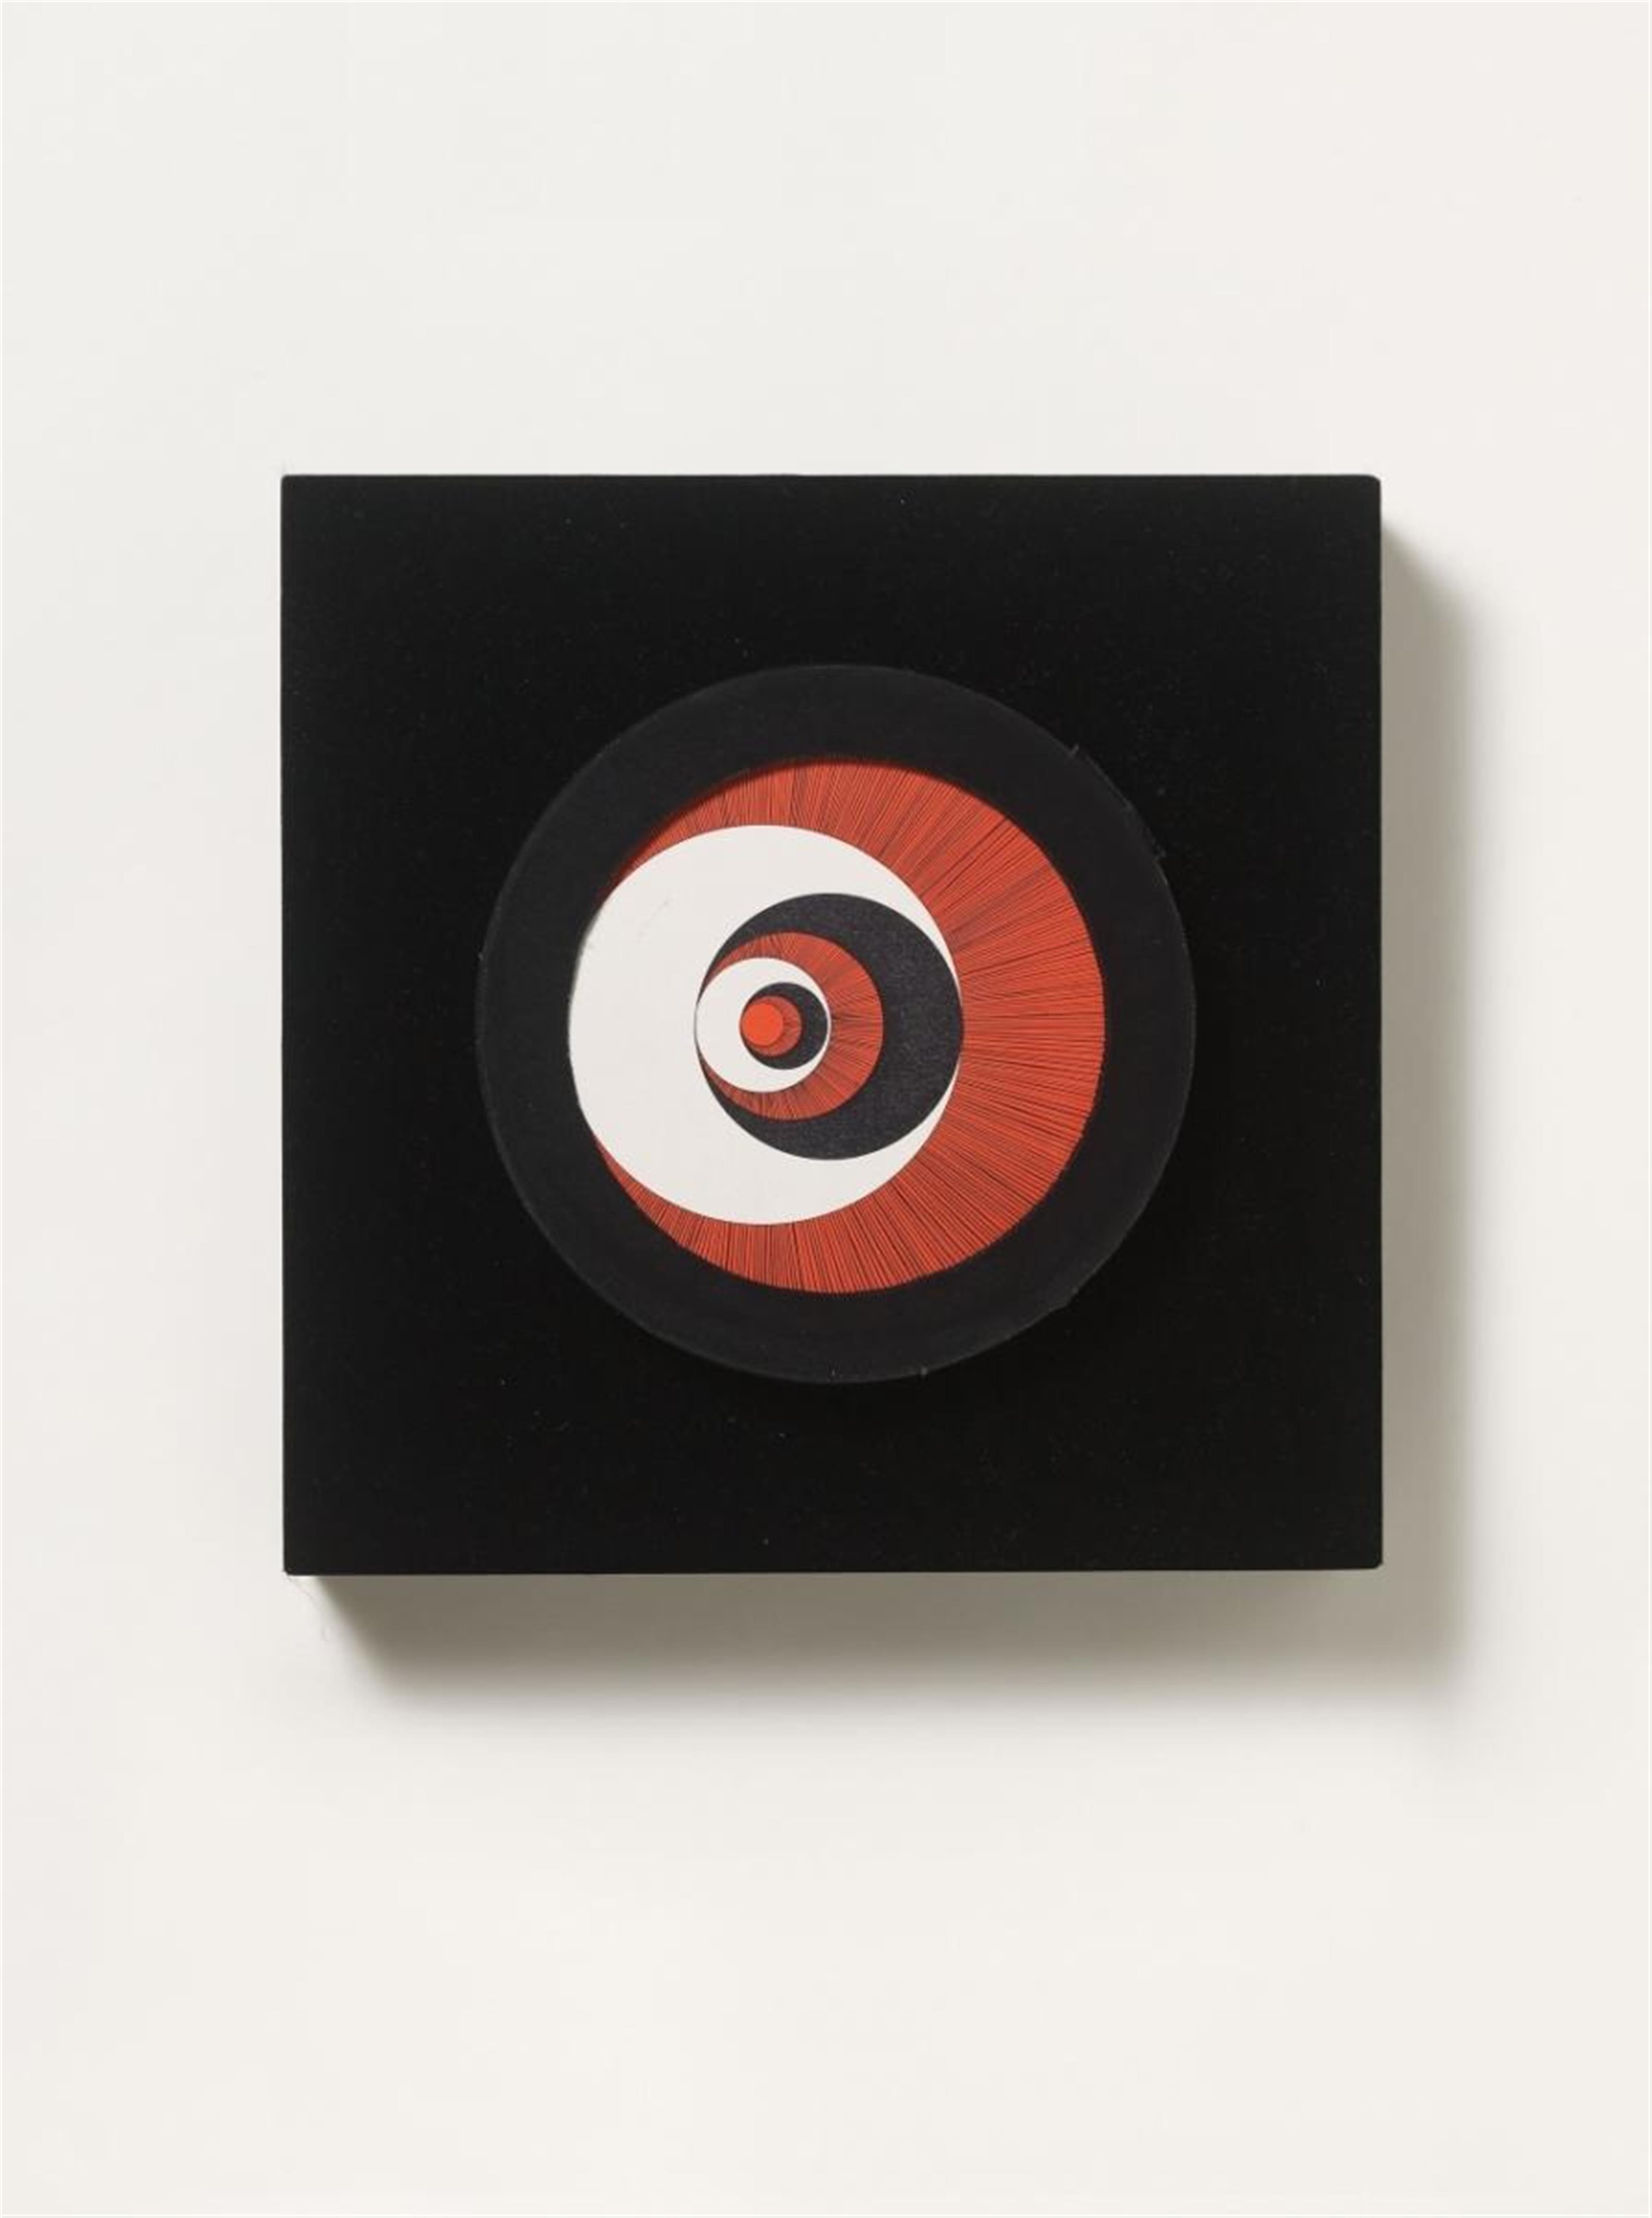 Marcel Duchamp - Rotoreliefs (Optical Disks) - image-1